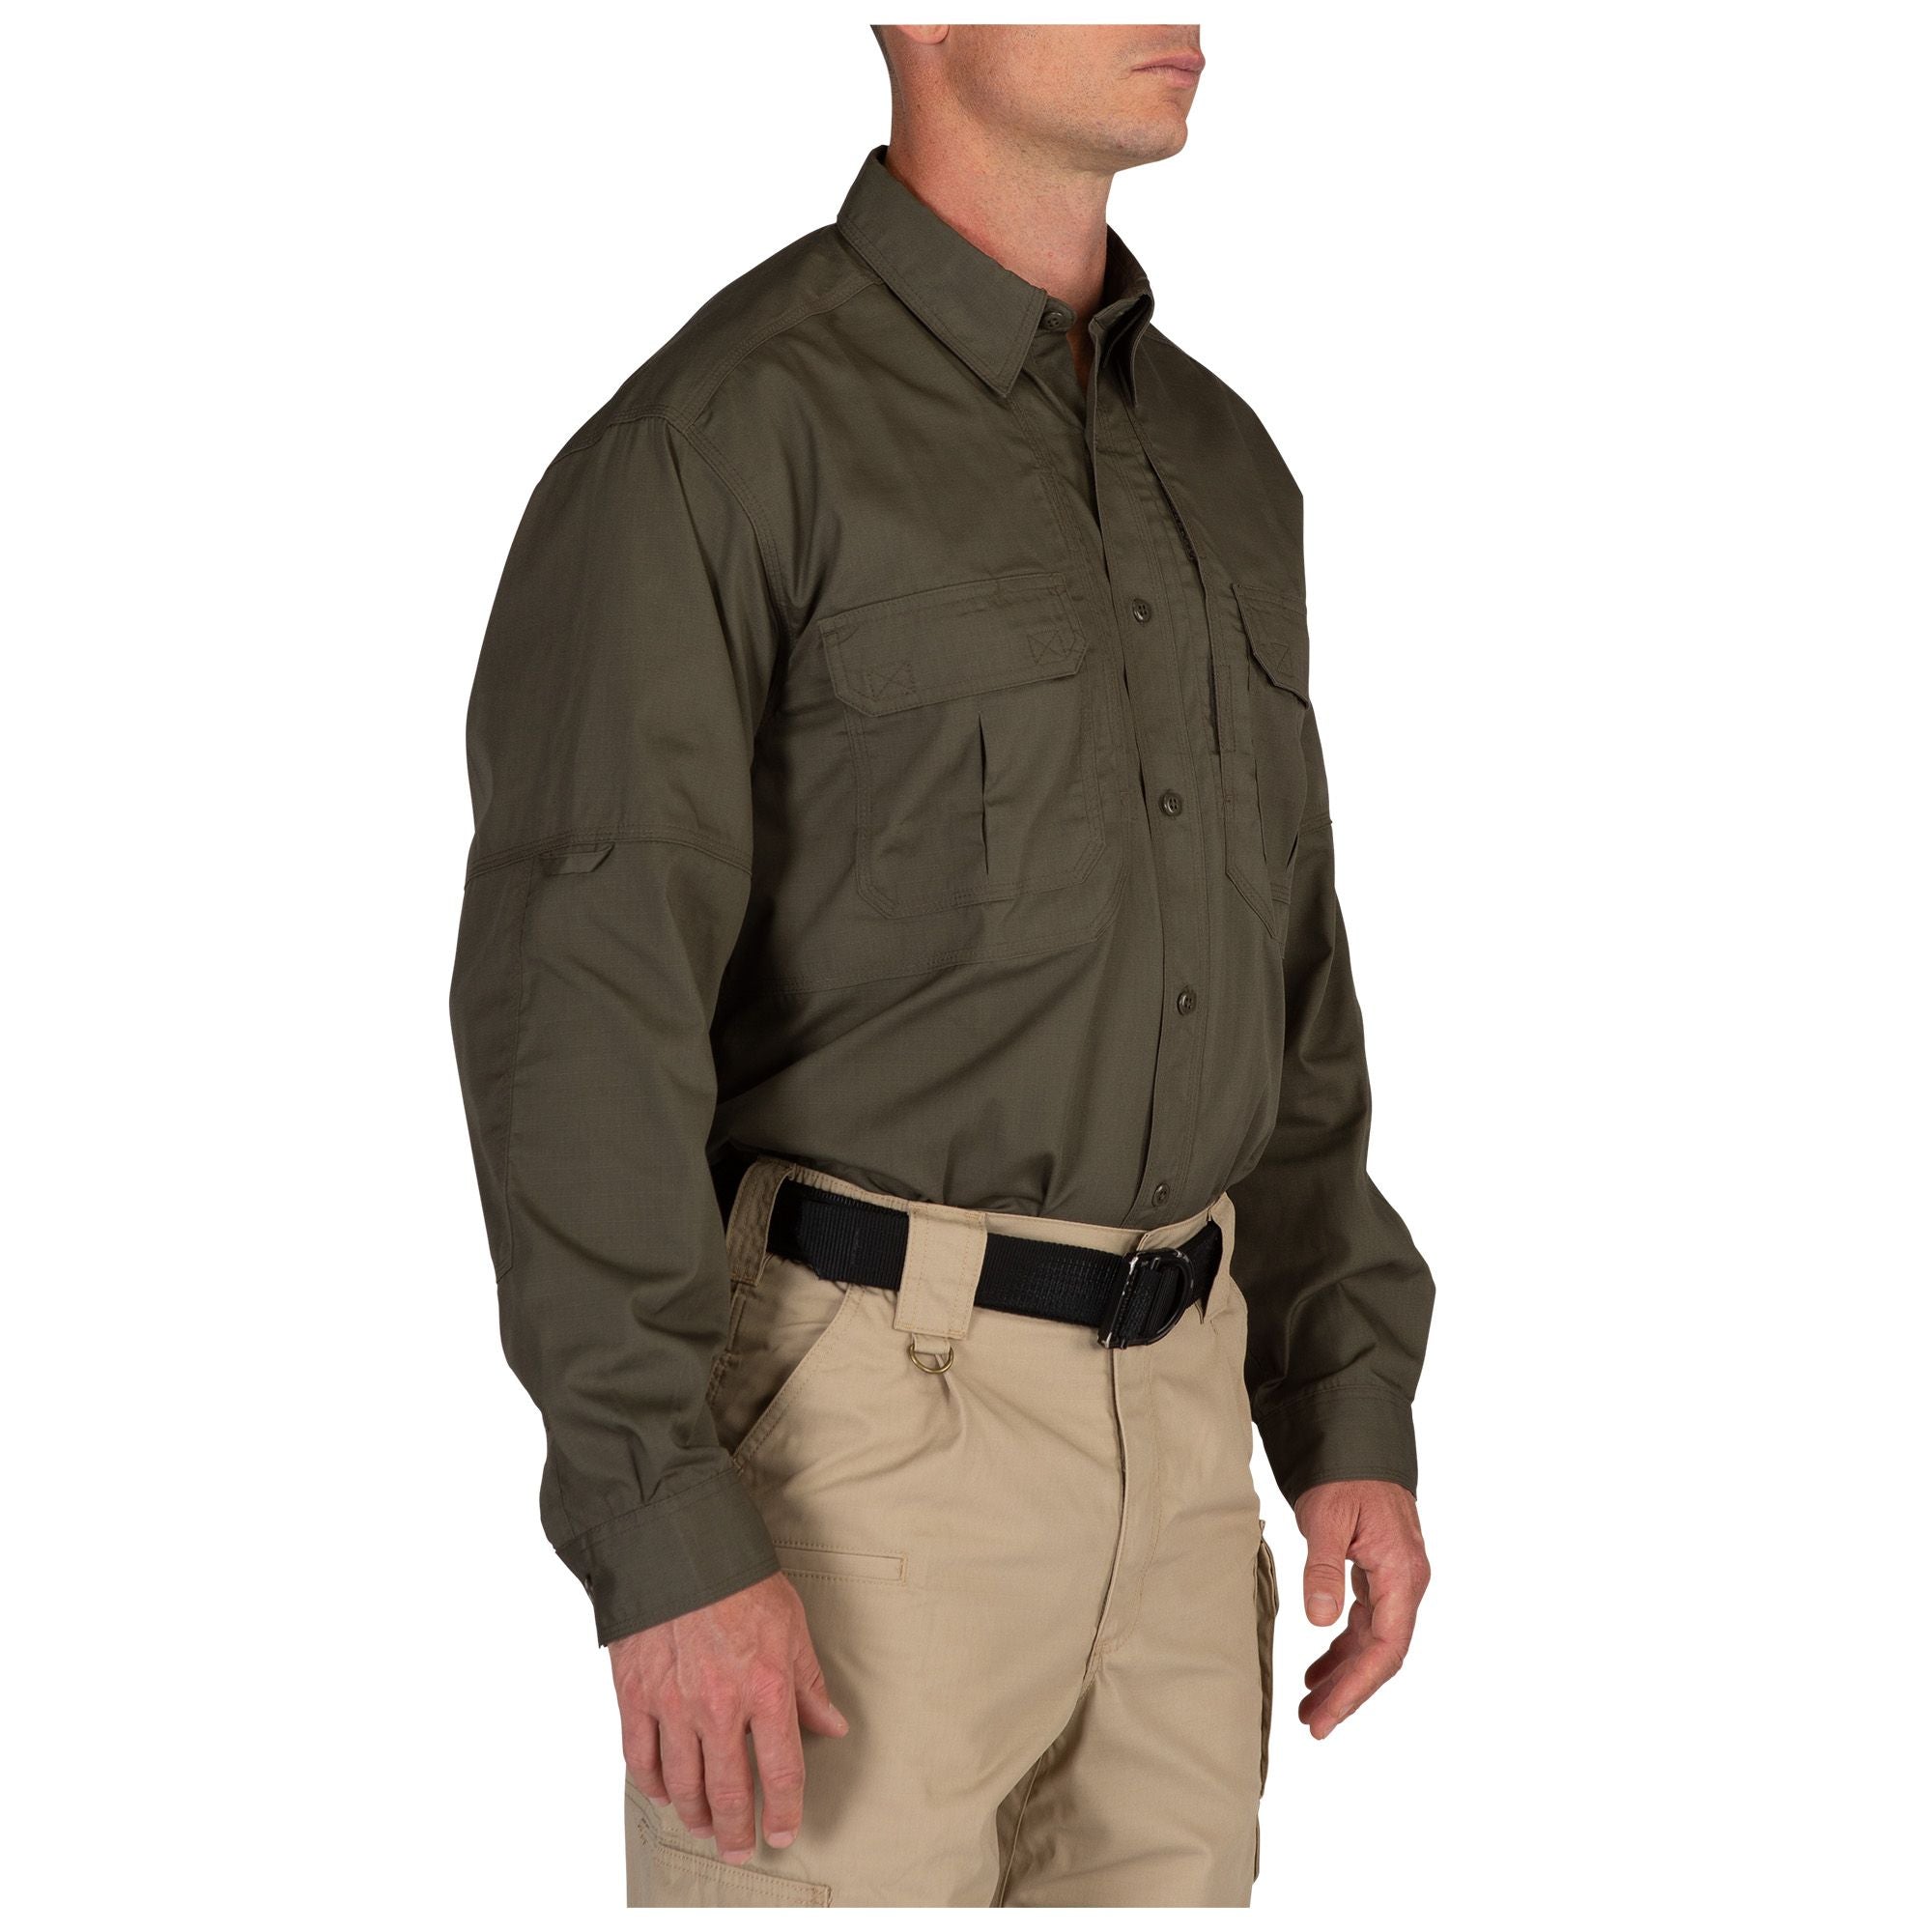 5.11 Tactical Taclite® Pro Long Sleeve Shirt - red-diamond-uniform-police-supply